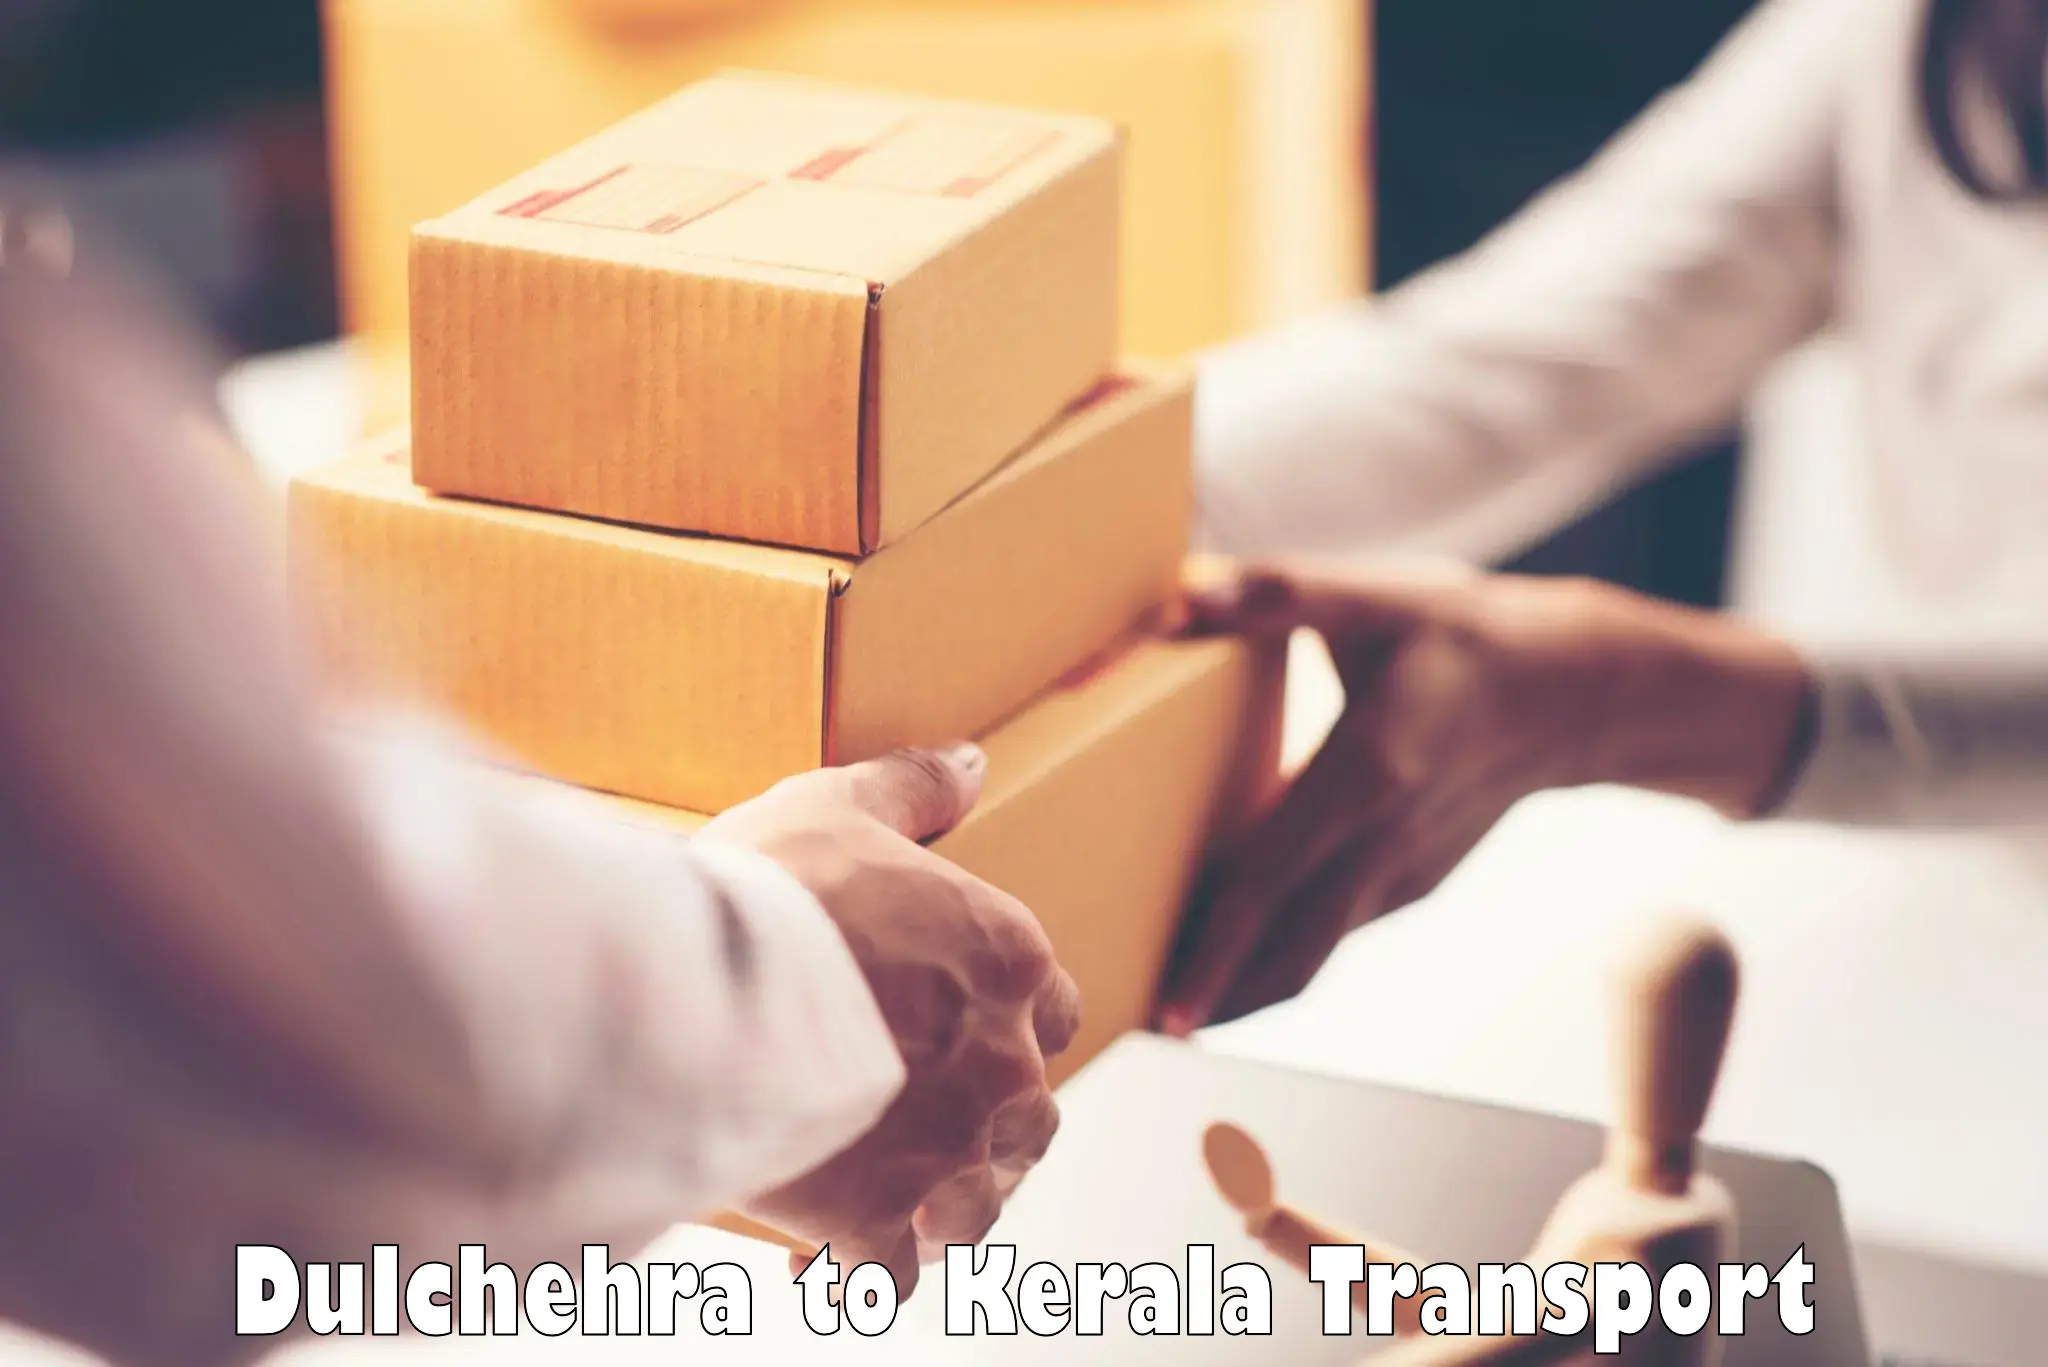 Truck transport companies in India Dulchehra to Pangodu